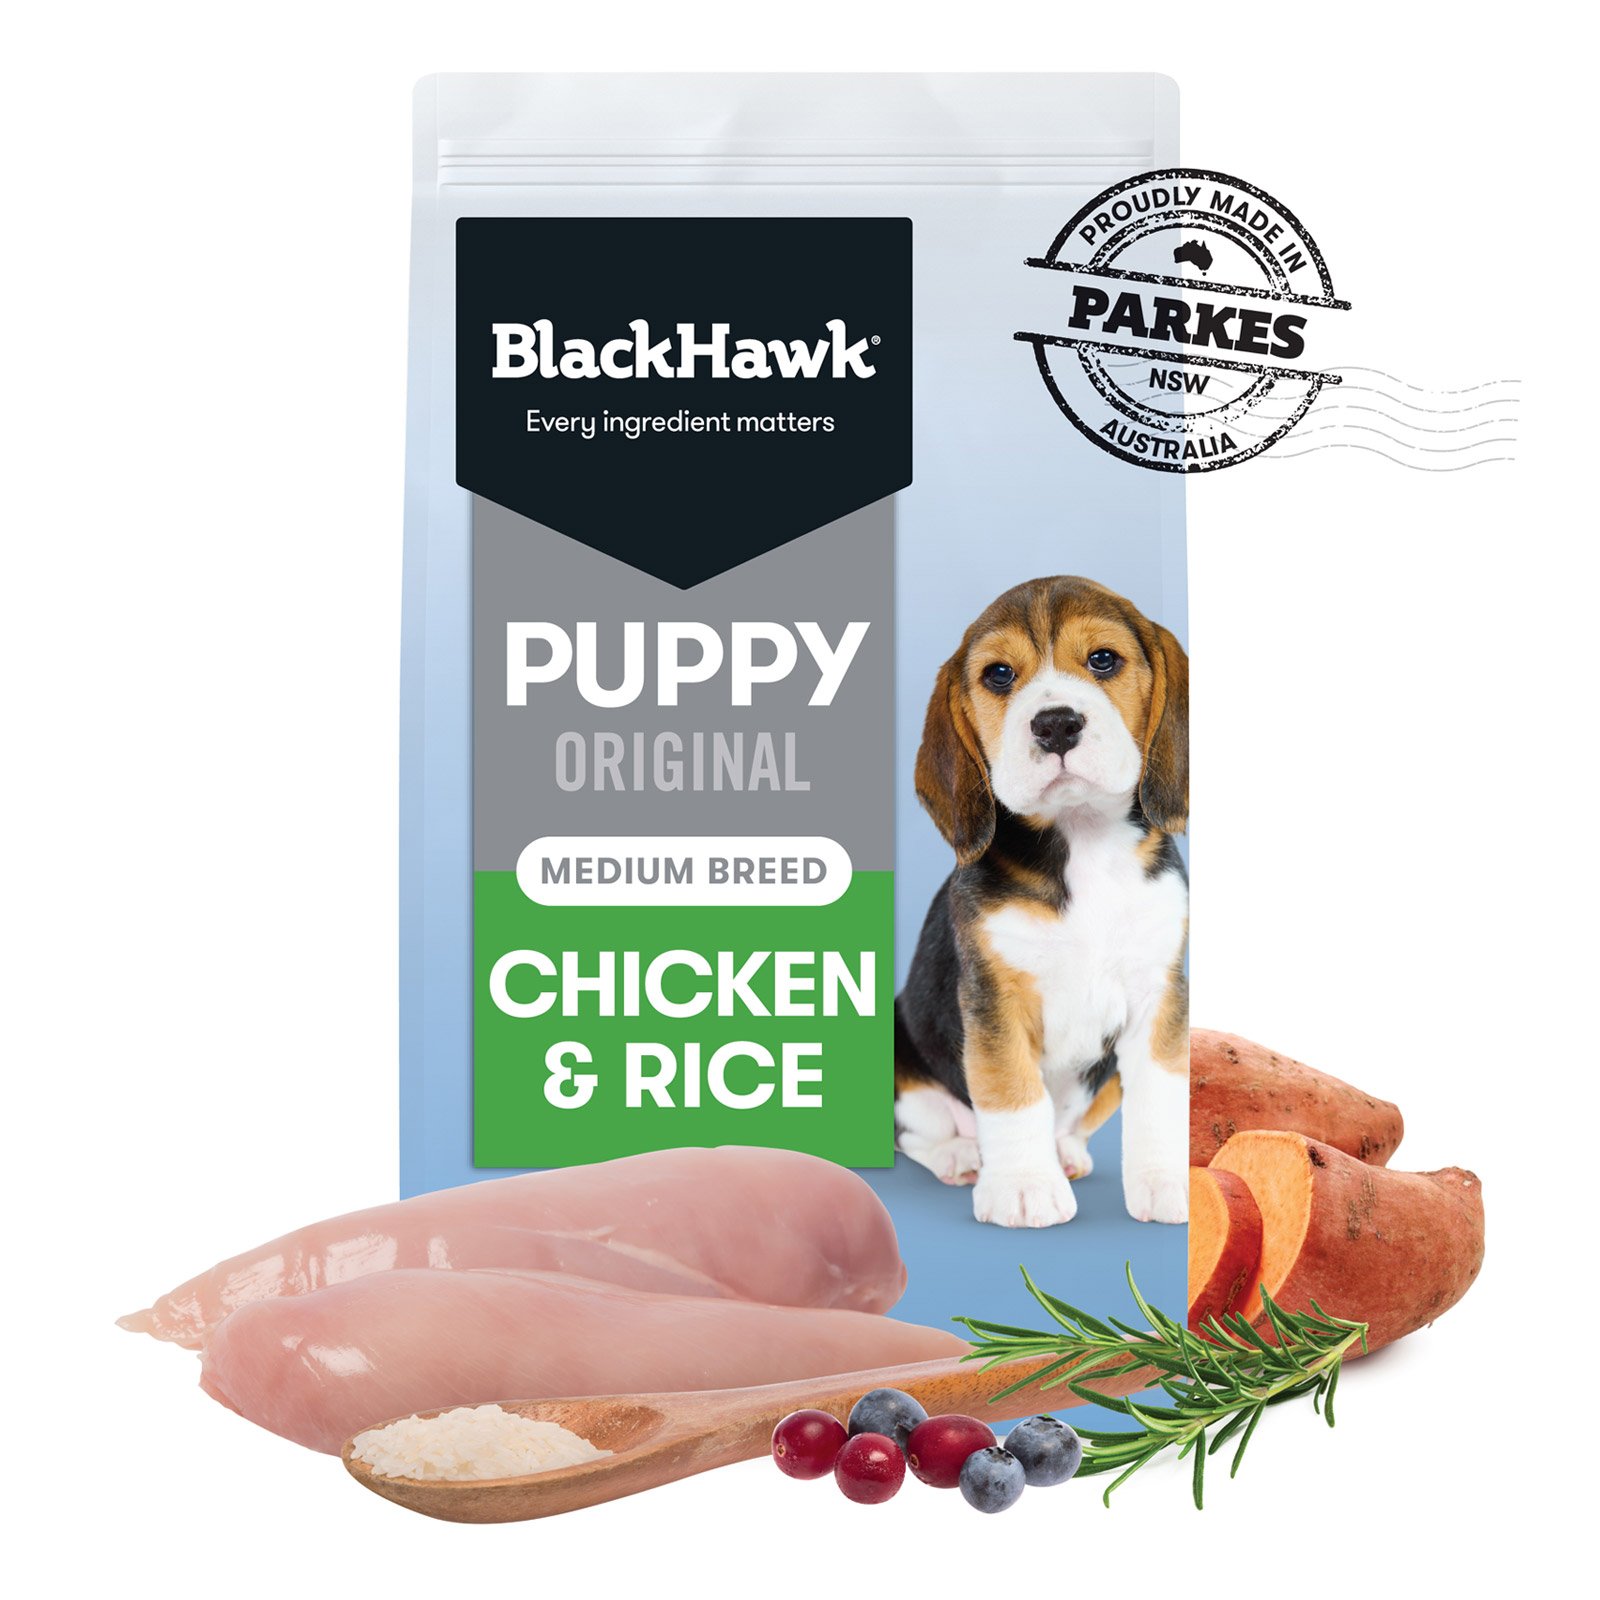 Black Hawk Puppy Original Medium Breed Chicken and Rice